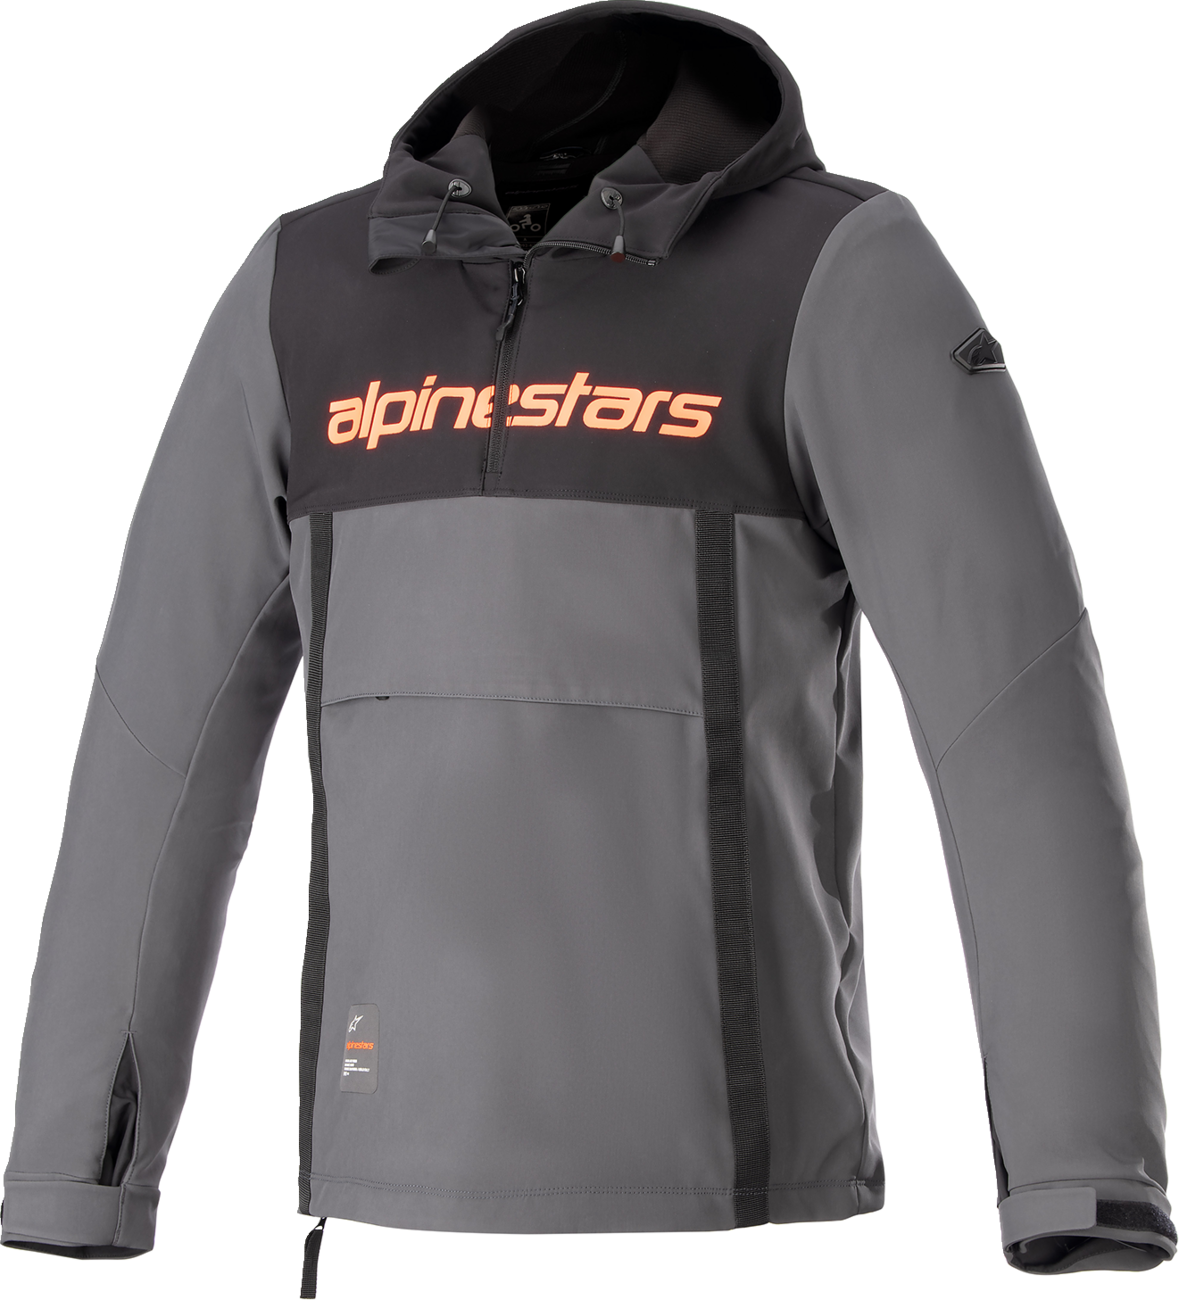 ALPINESTARS Sherpa Jacket - Black/Gray - 3XL 4208123-1134-3X